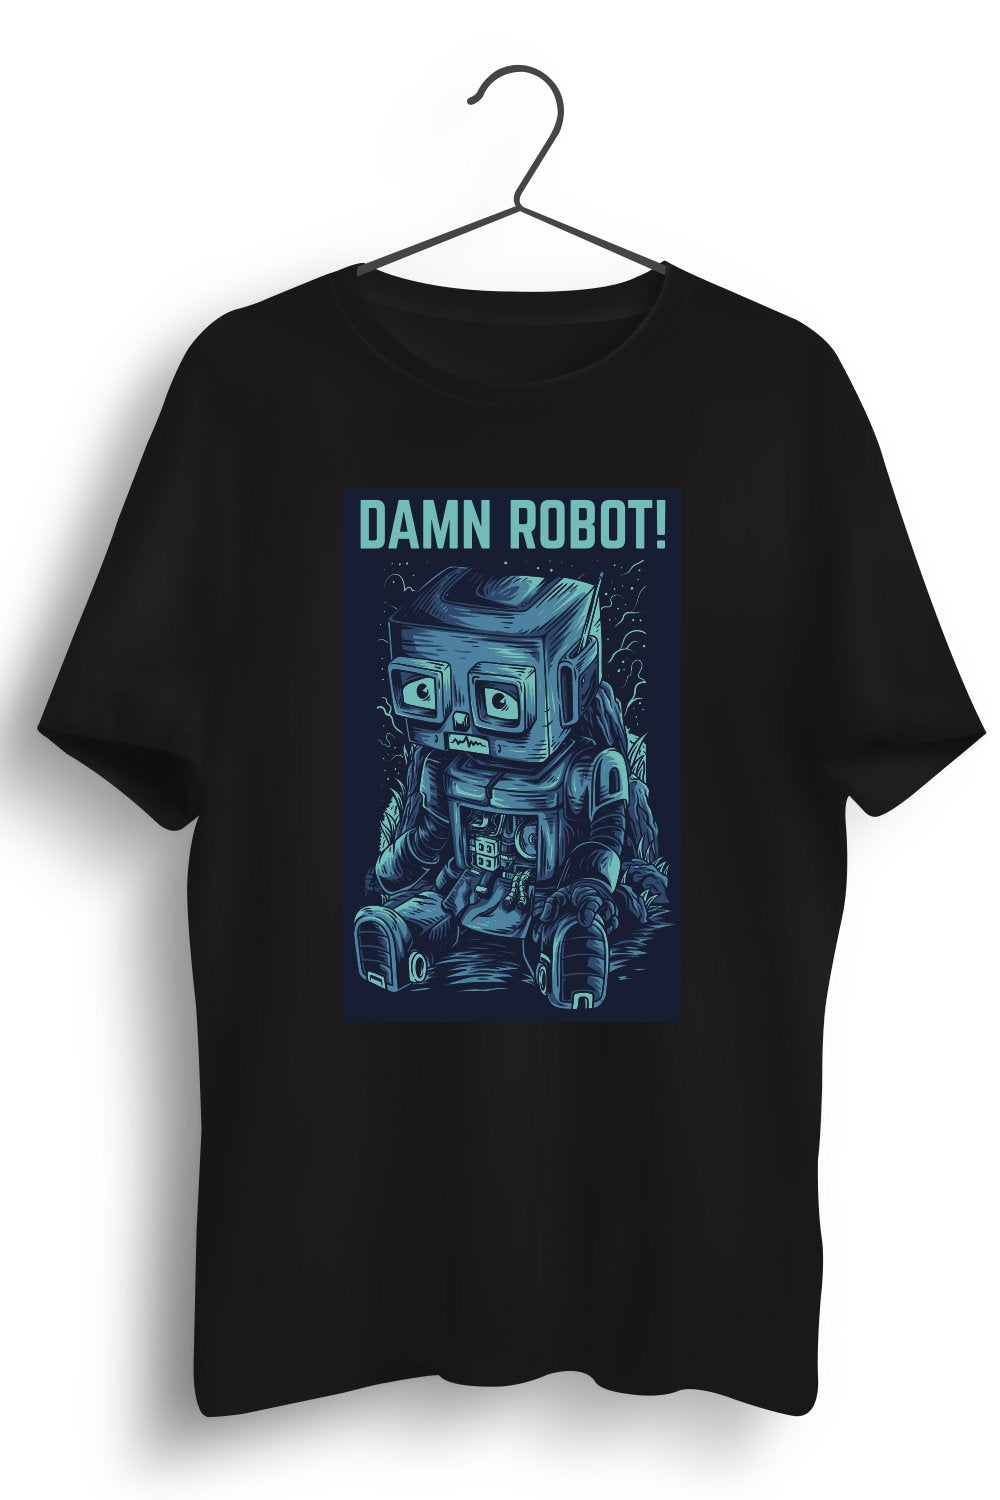 Damn Robot Graphic Printed Black Tshirt